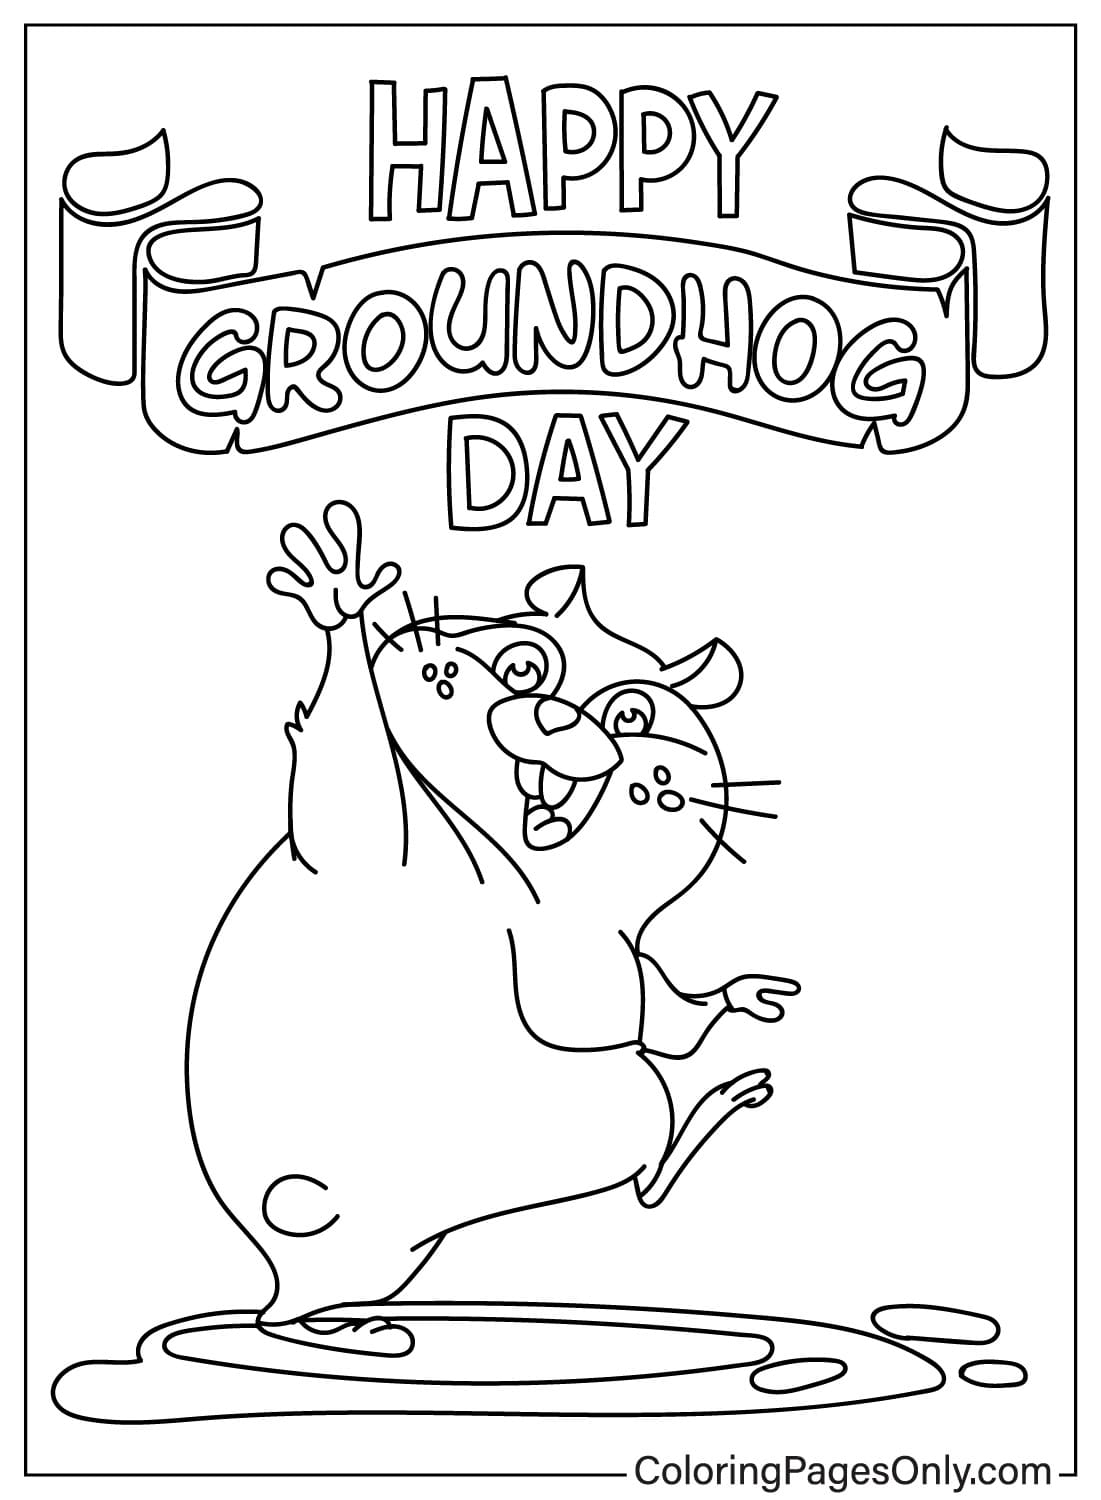 Fijne Groundhog Day Gratis kleurplaat van Groundhog Day